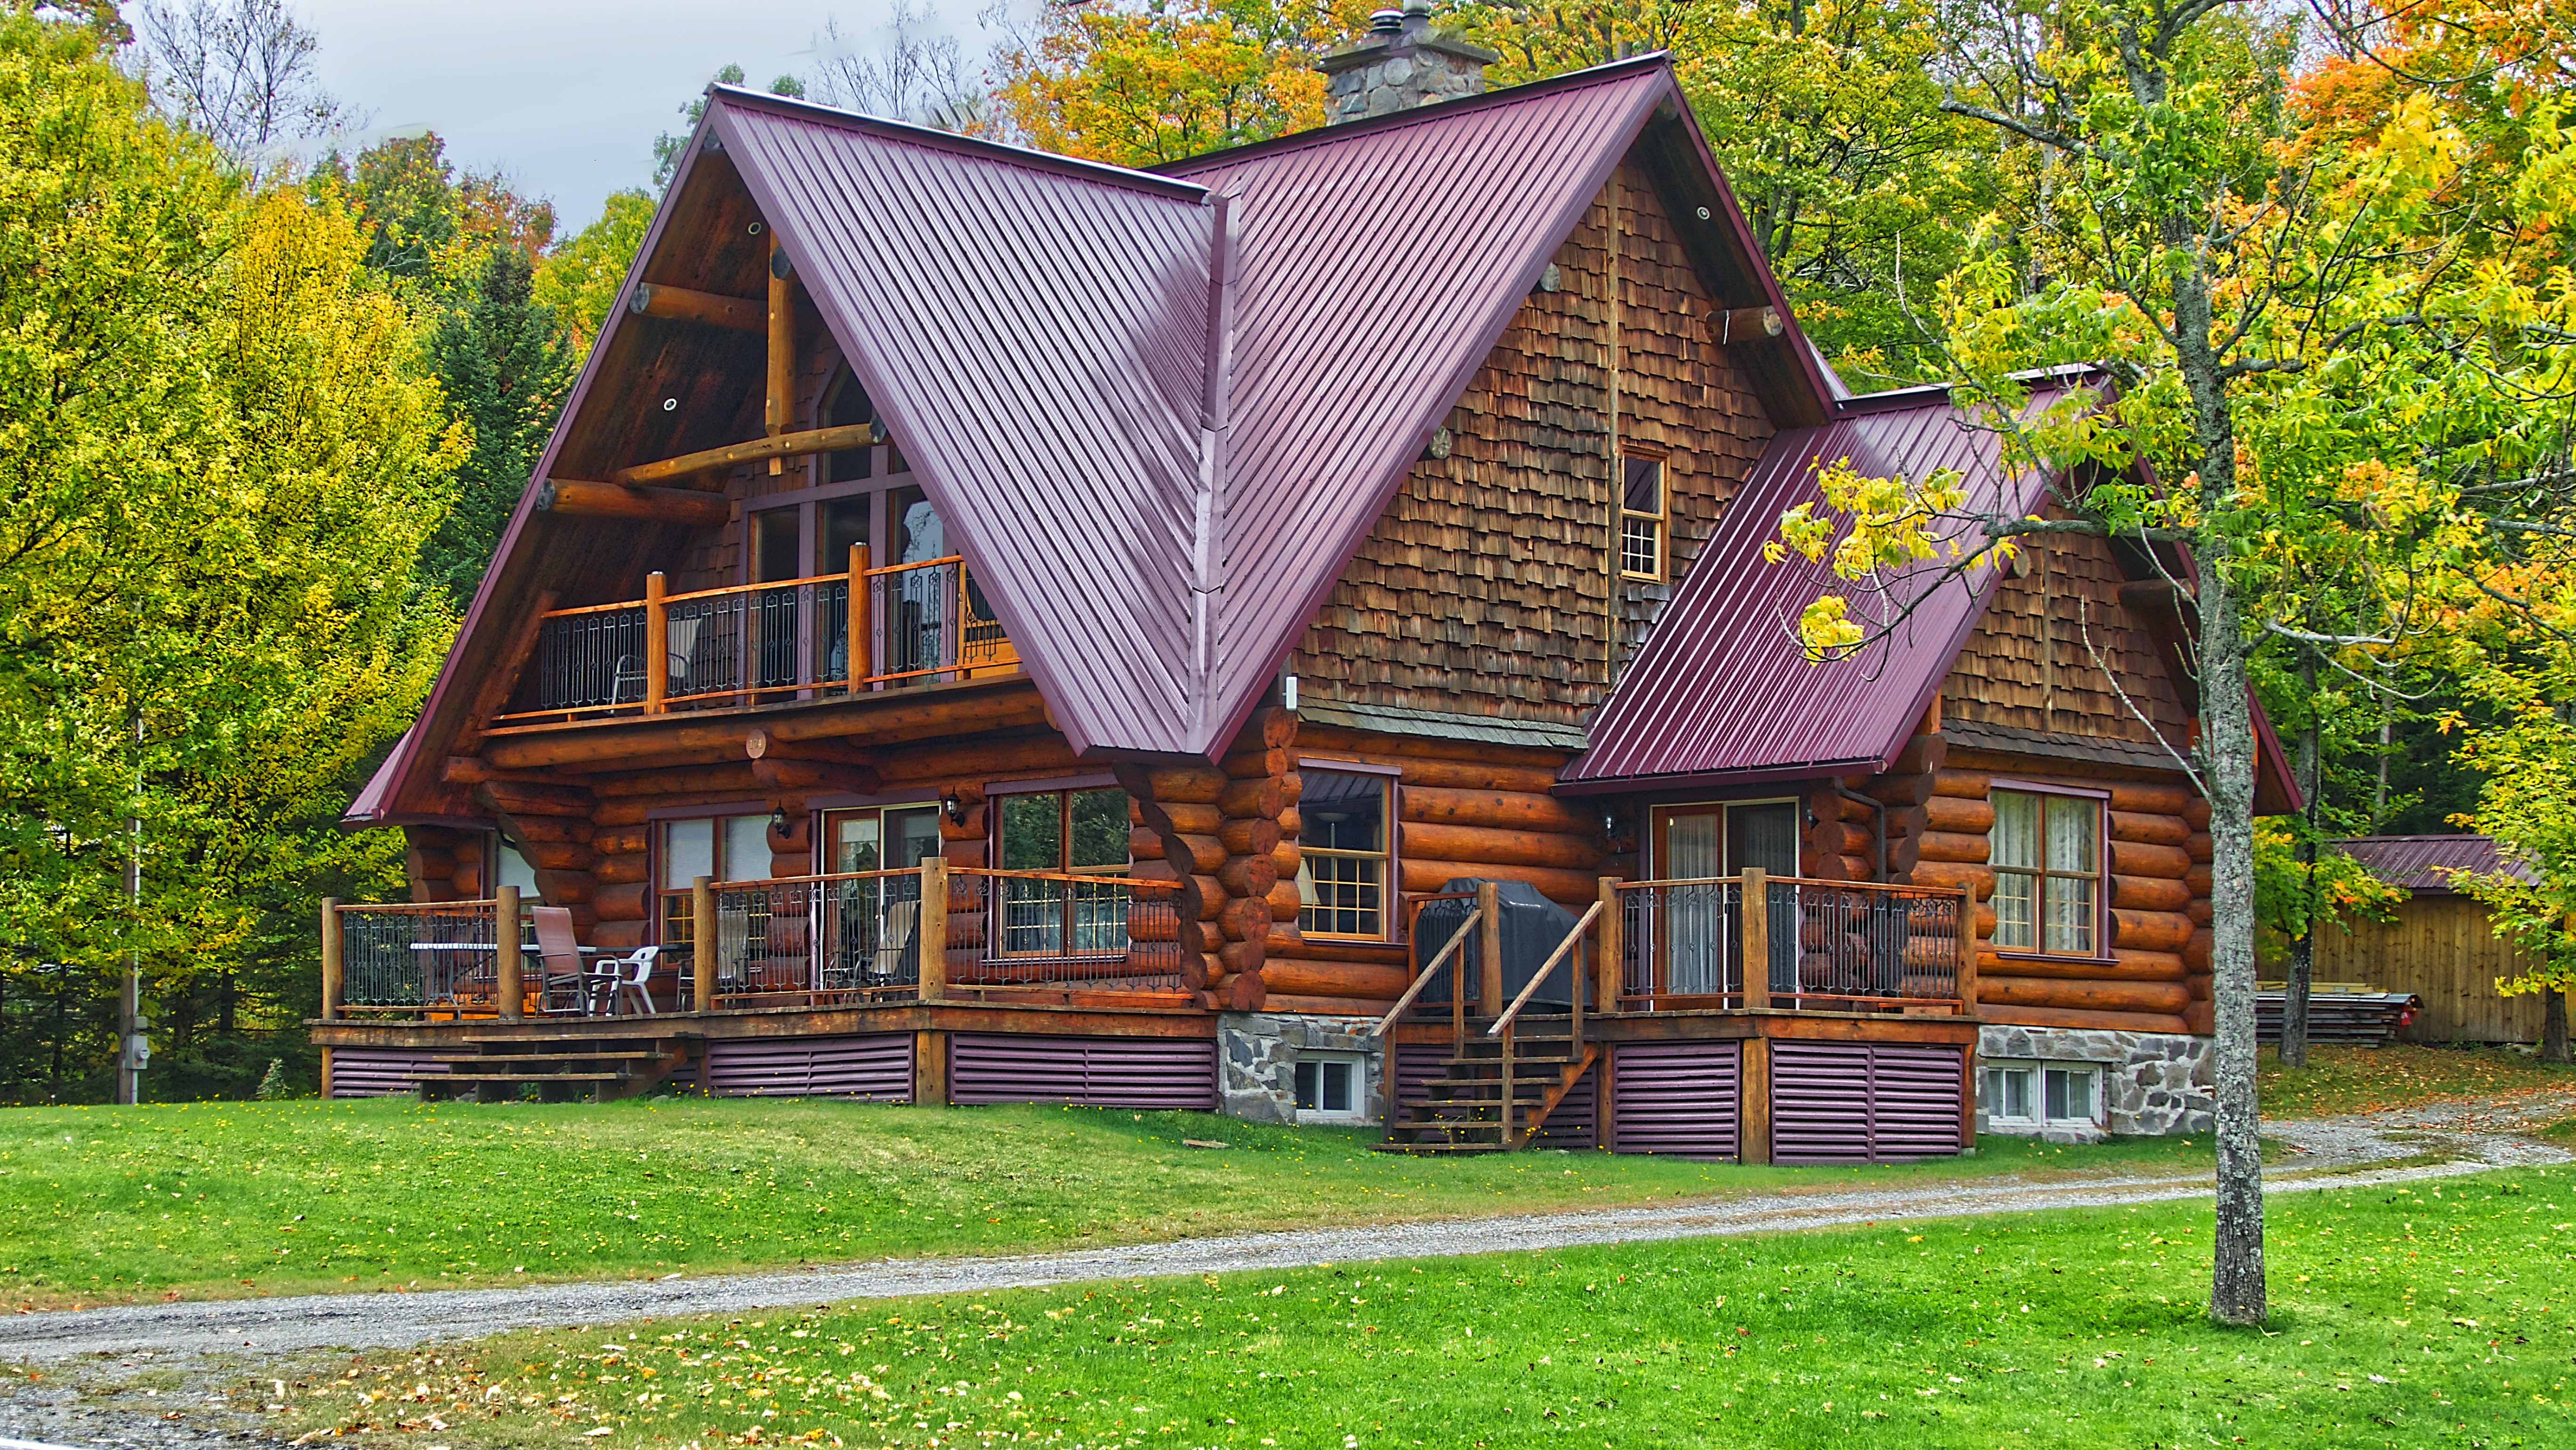 Hocking Hills cabins for rent